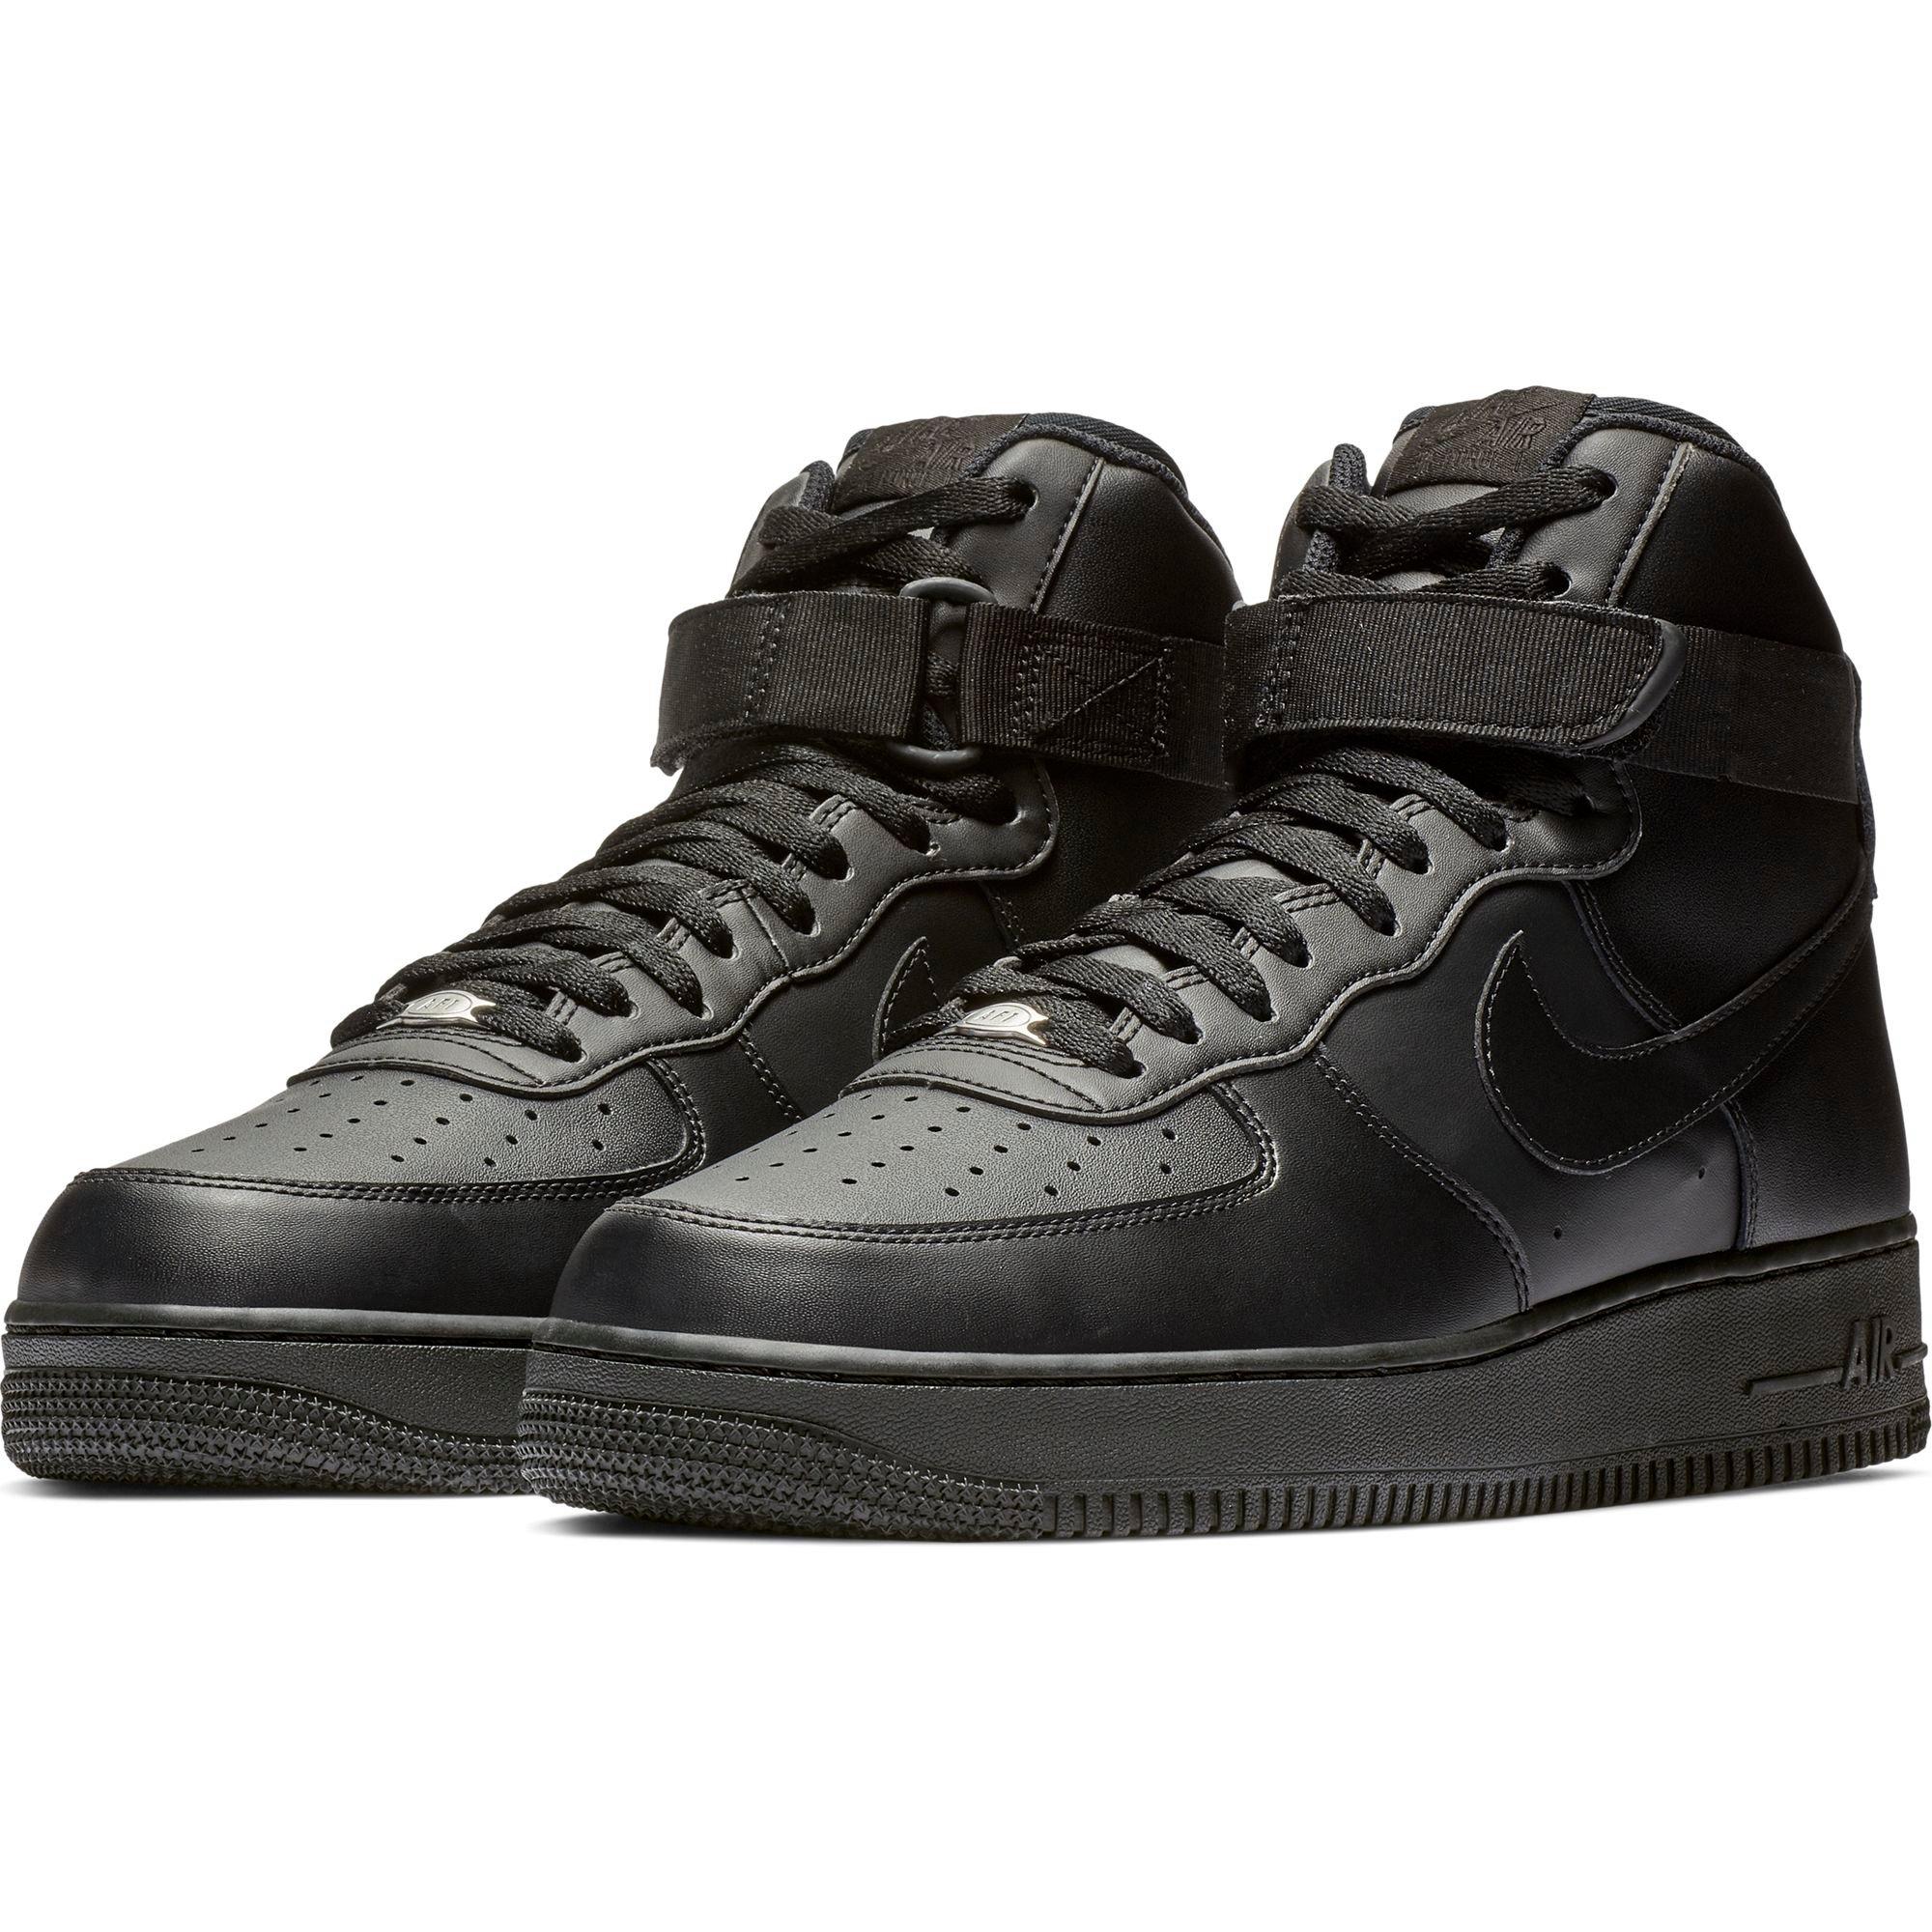 High Top Nike Air Force 1 Shoes & Sneakers - Hibbett